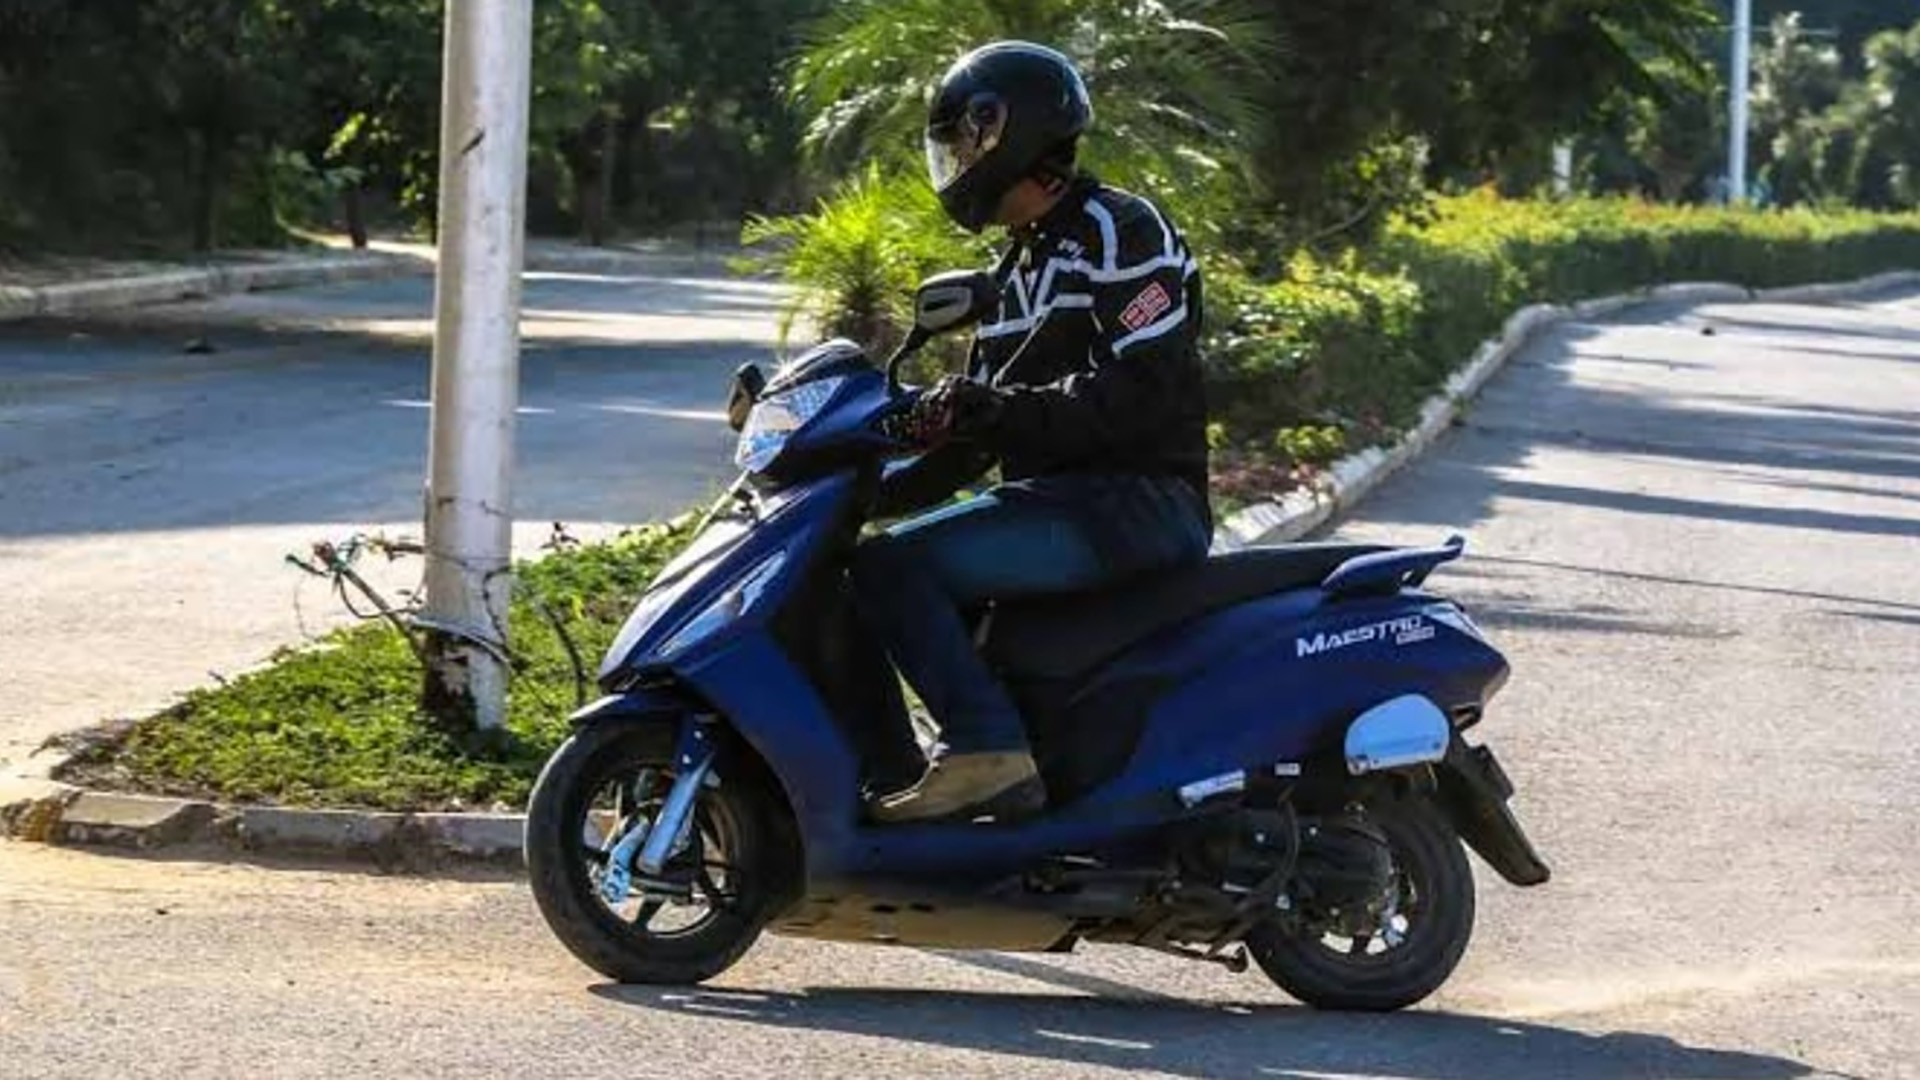 Le scooter Maestro de Hero MotoCorp